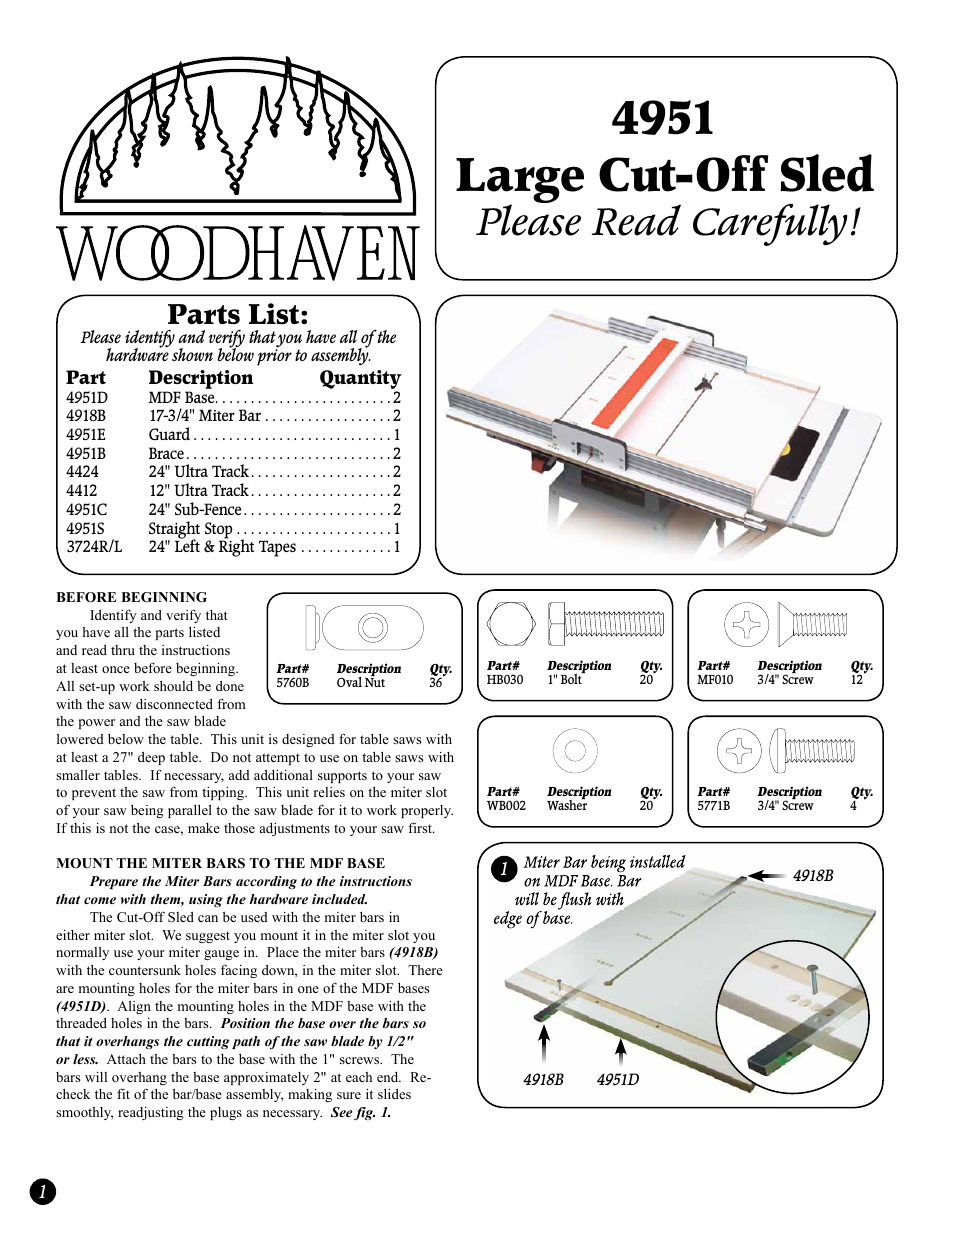 4951: Large Cut-Off Sled